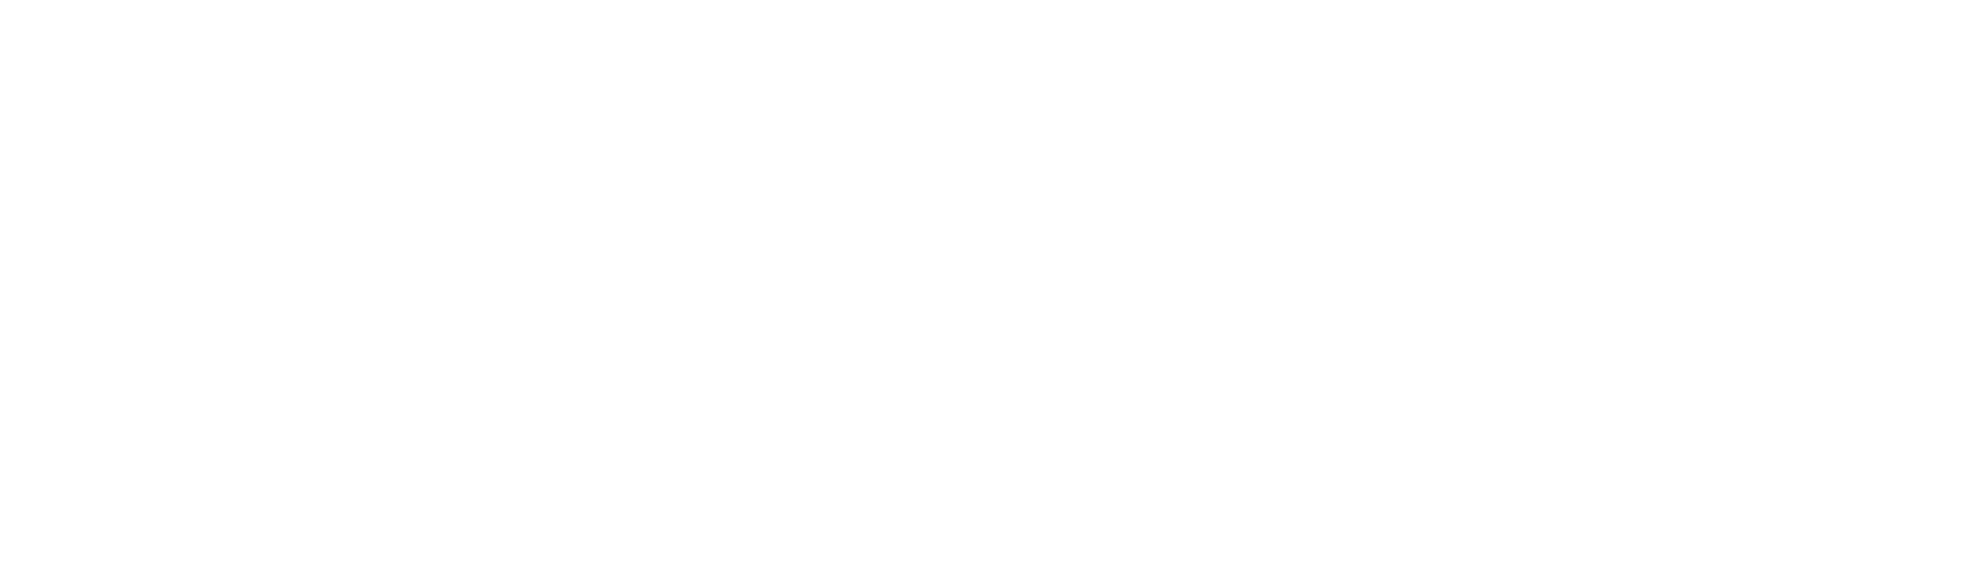 Liberty Flexible Workspaces